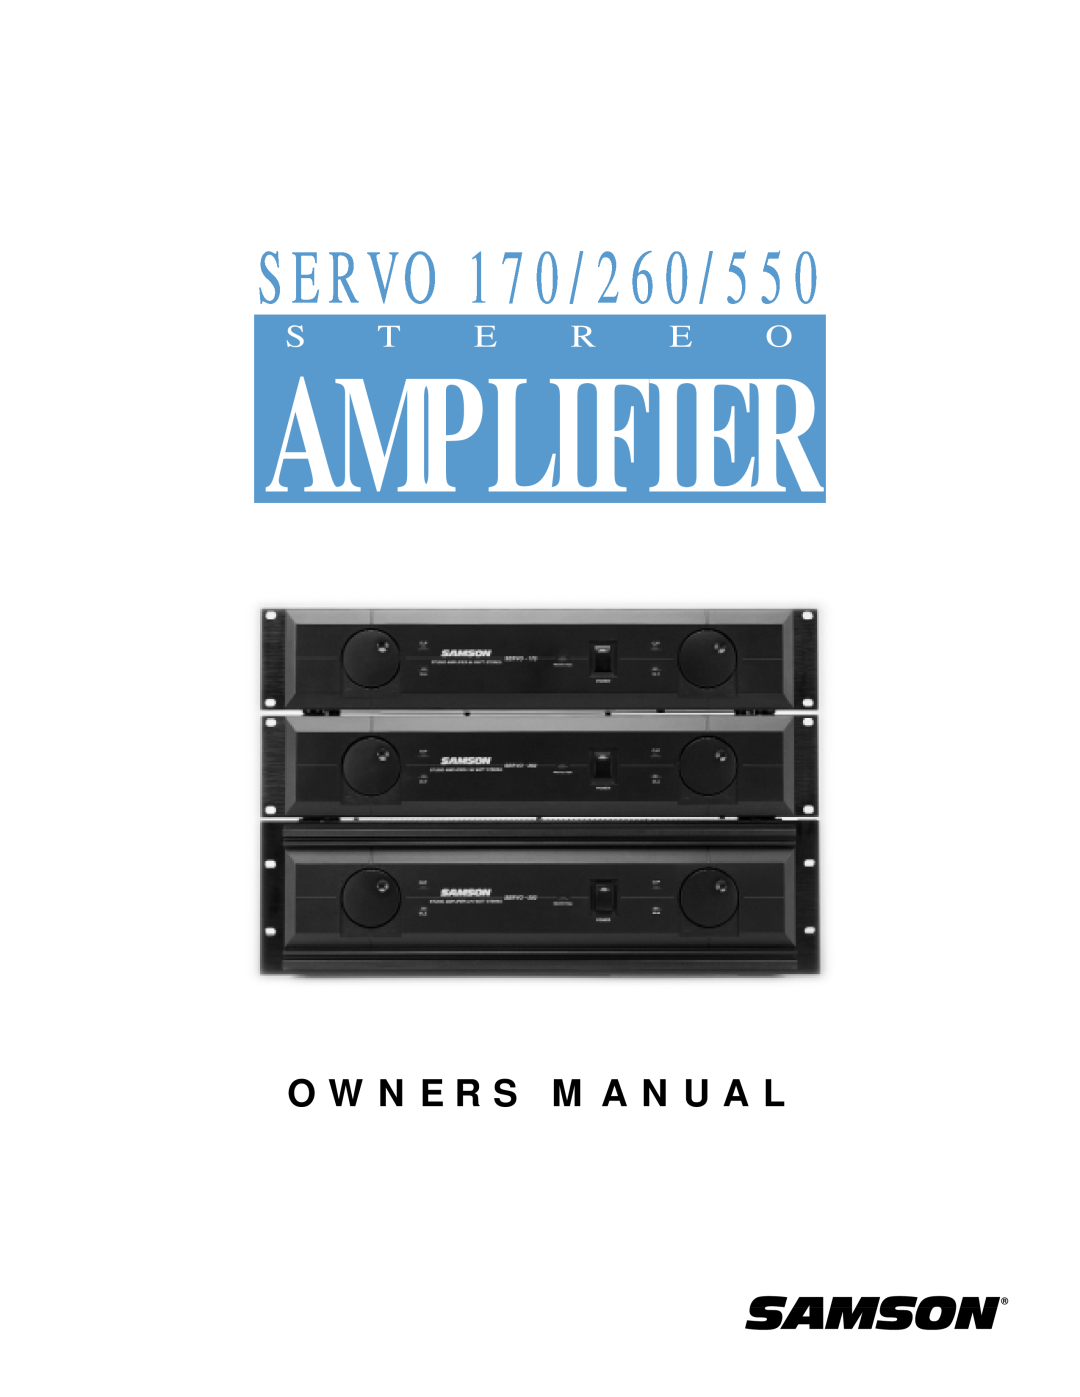 Samson owner manual Amplifier, SERVO 170/260/550, S T E R E O 